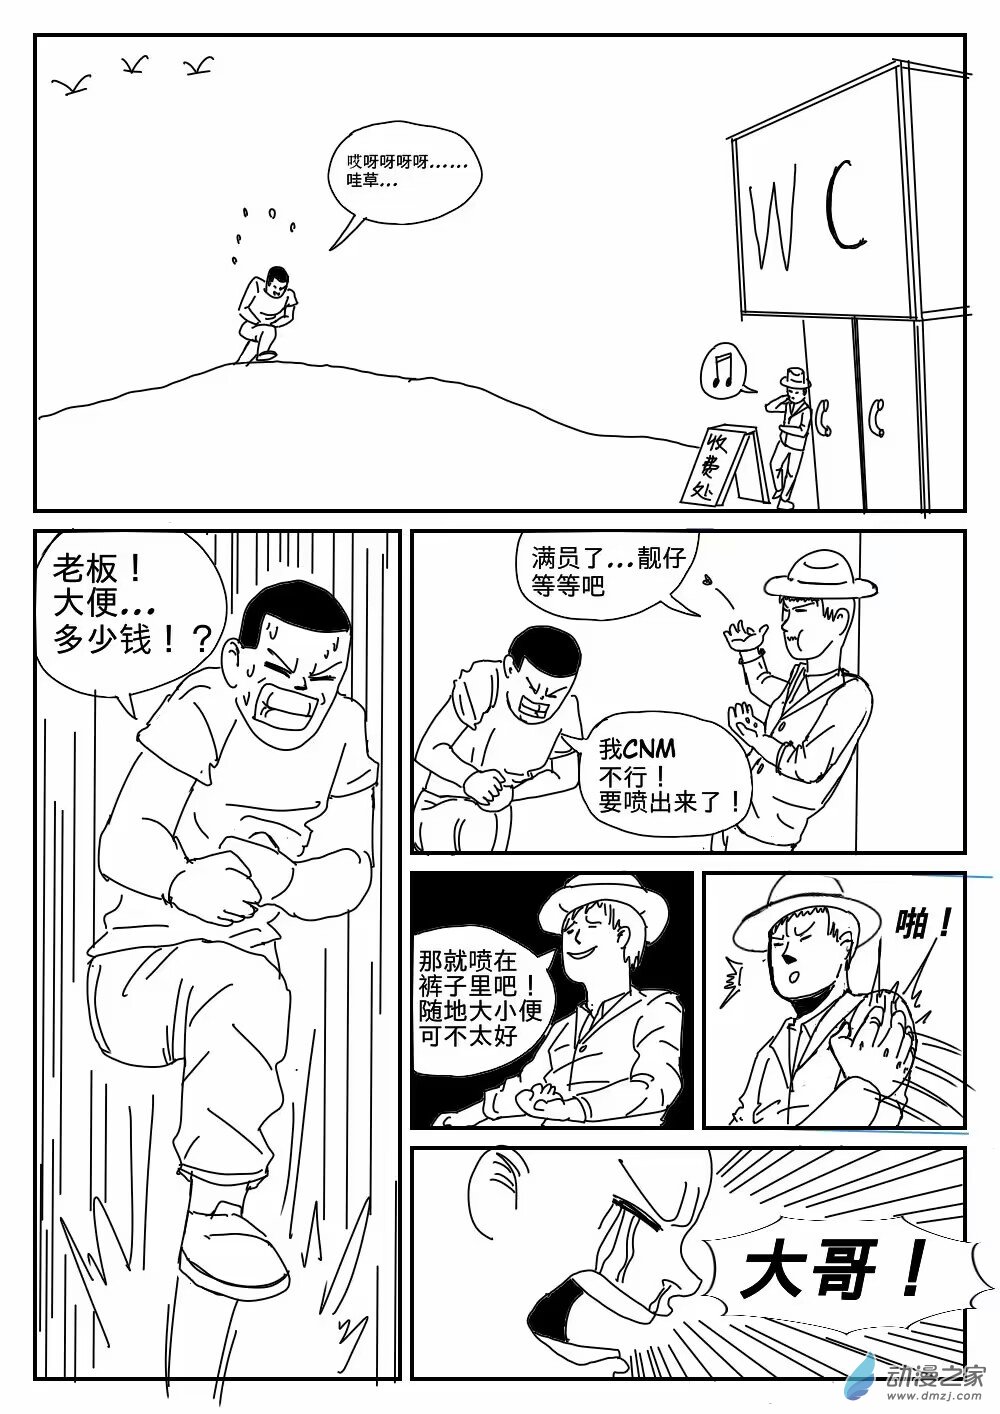 K神的短篇漫畫集 - 03 公廁 - 1